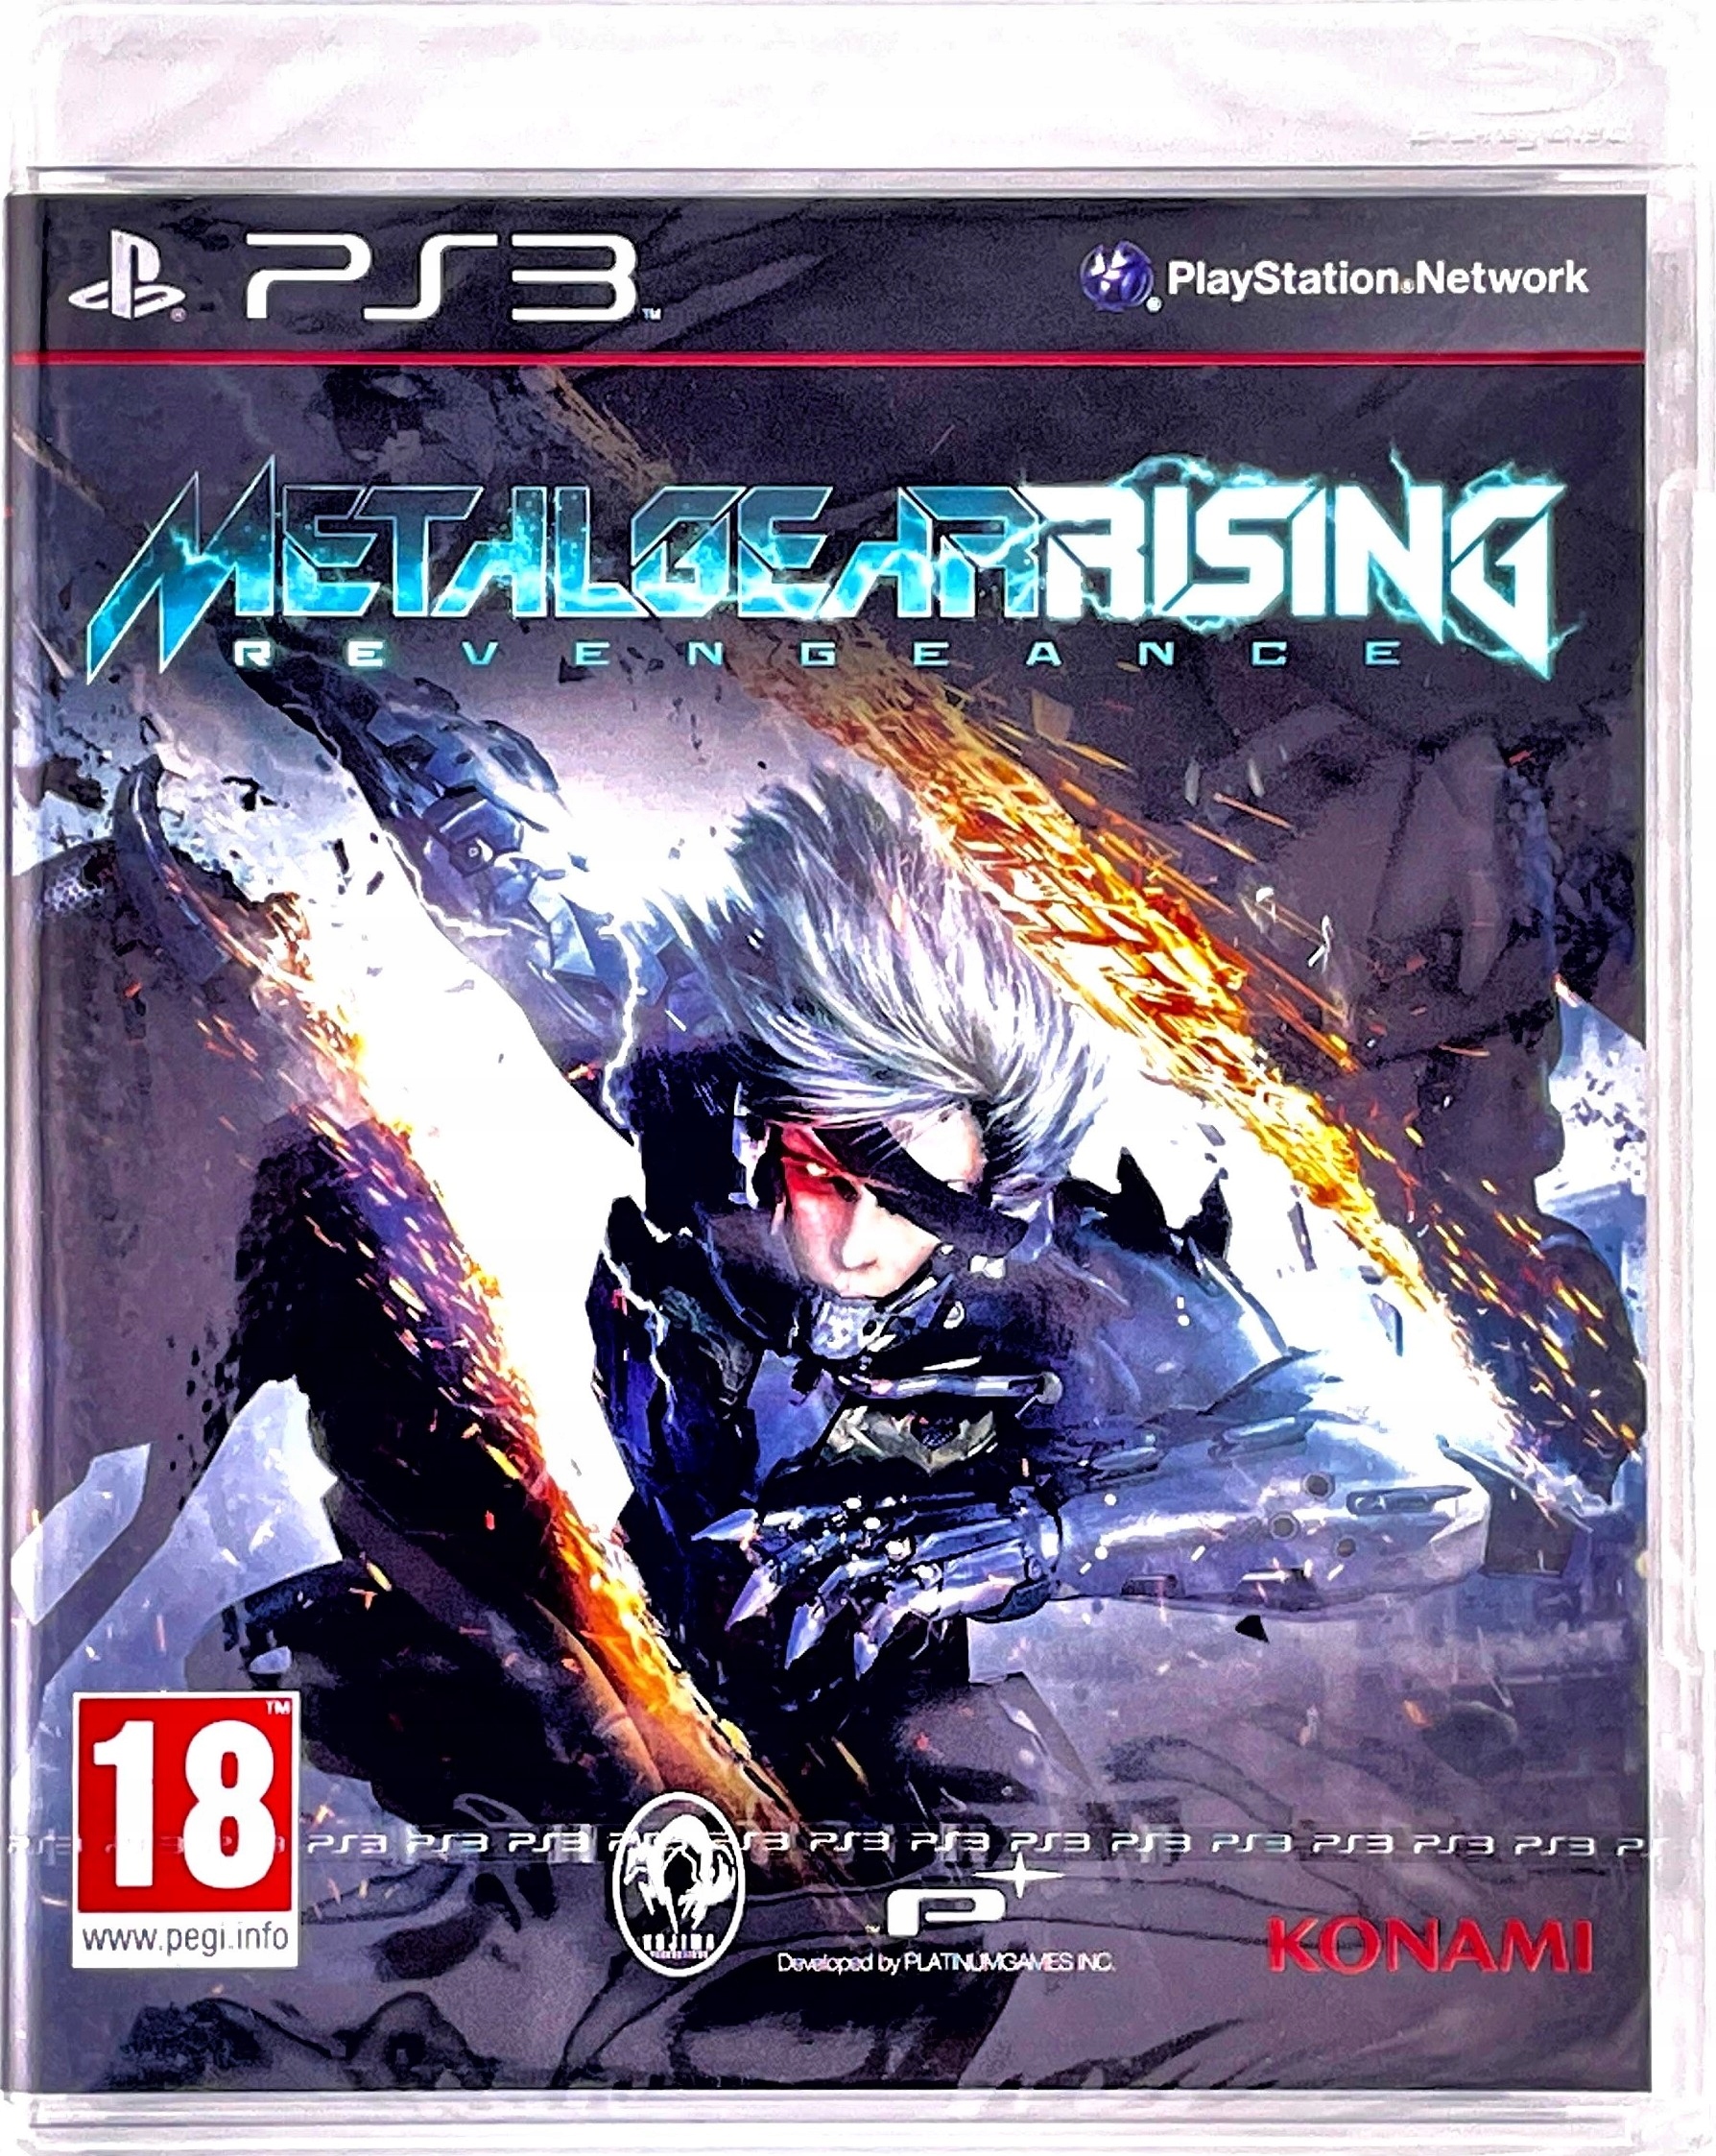 Misverstand Pornografie Aanbeveling Metal Gear Rising Revengeance PS3 - Stan: nowy 129 zł - Sklepy, Opinie,  Ceny w Allegro.pl